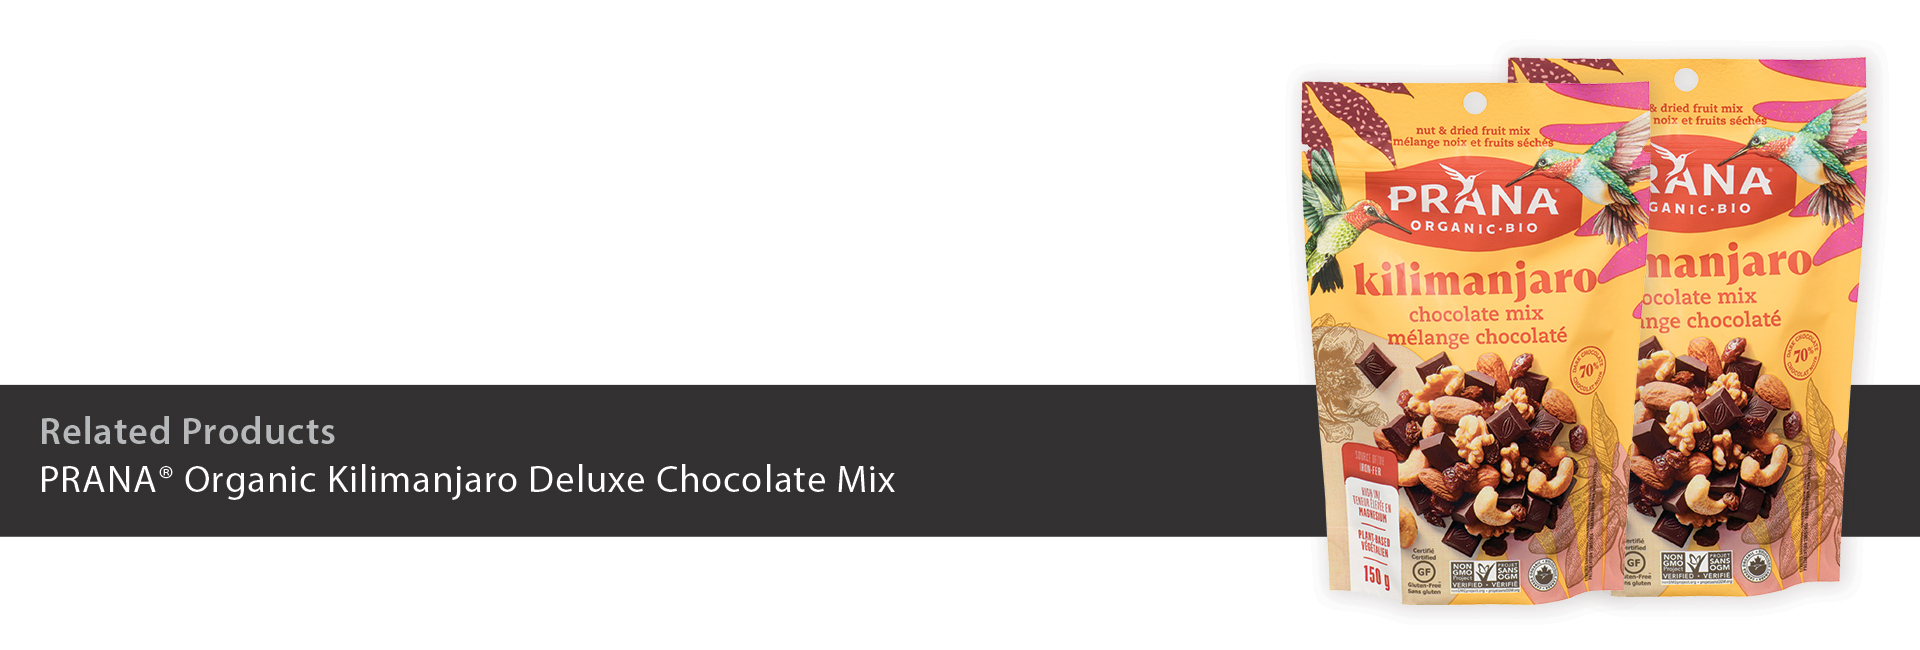 PRANA Organic Kilimanjaro Deluxe Chocolate Mix